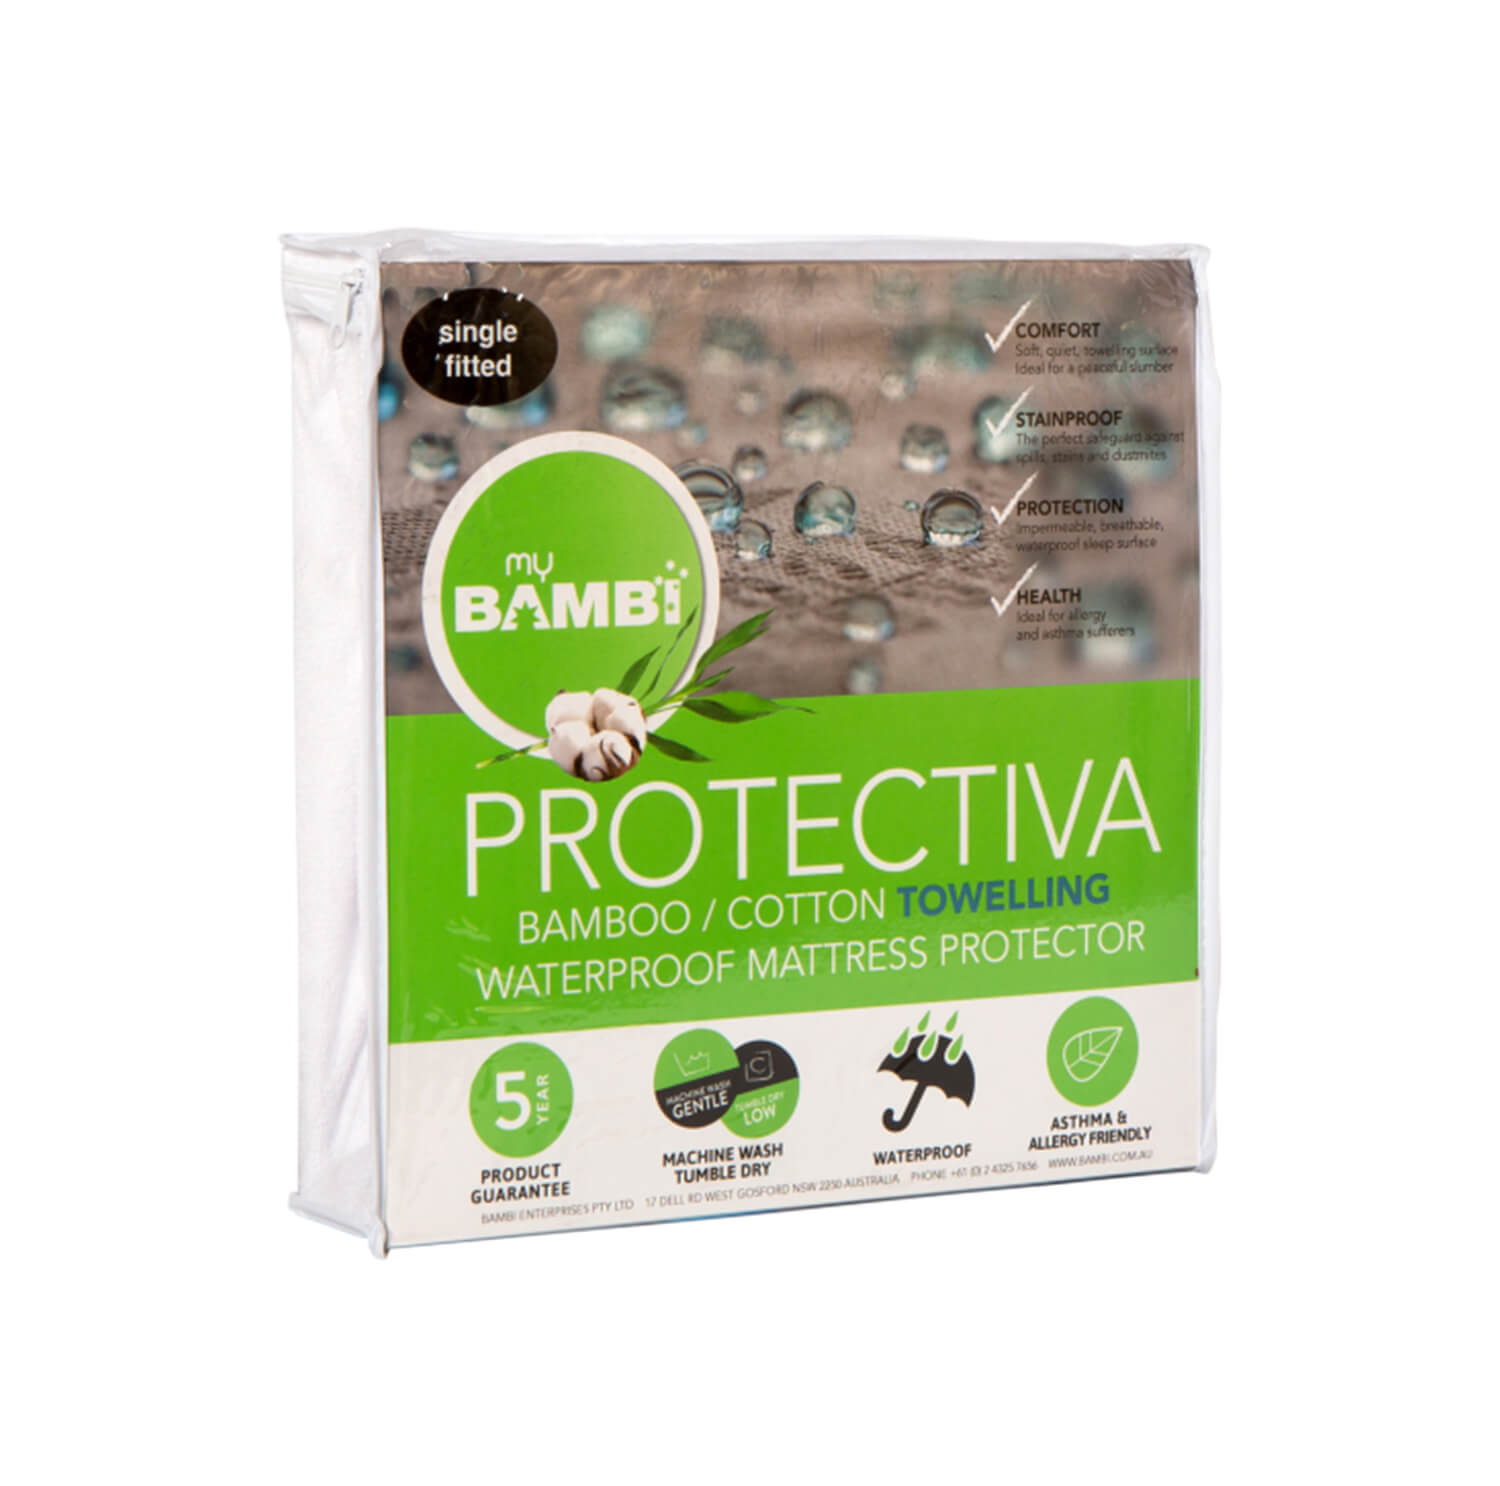 Bambi Protectiva Cotton/Bamboo Towelling Mattress Protector